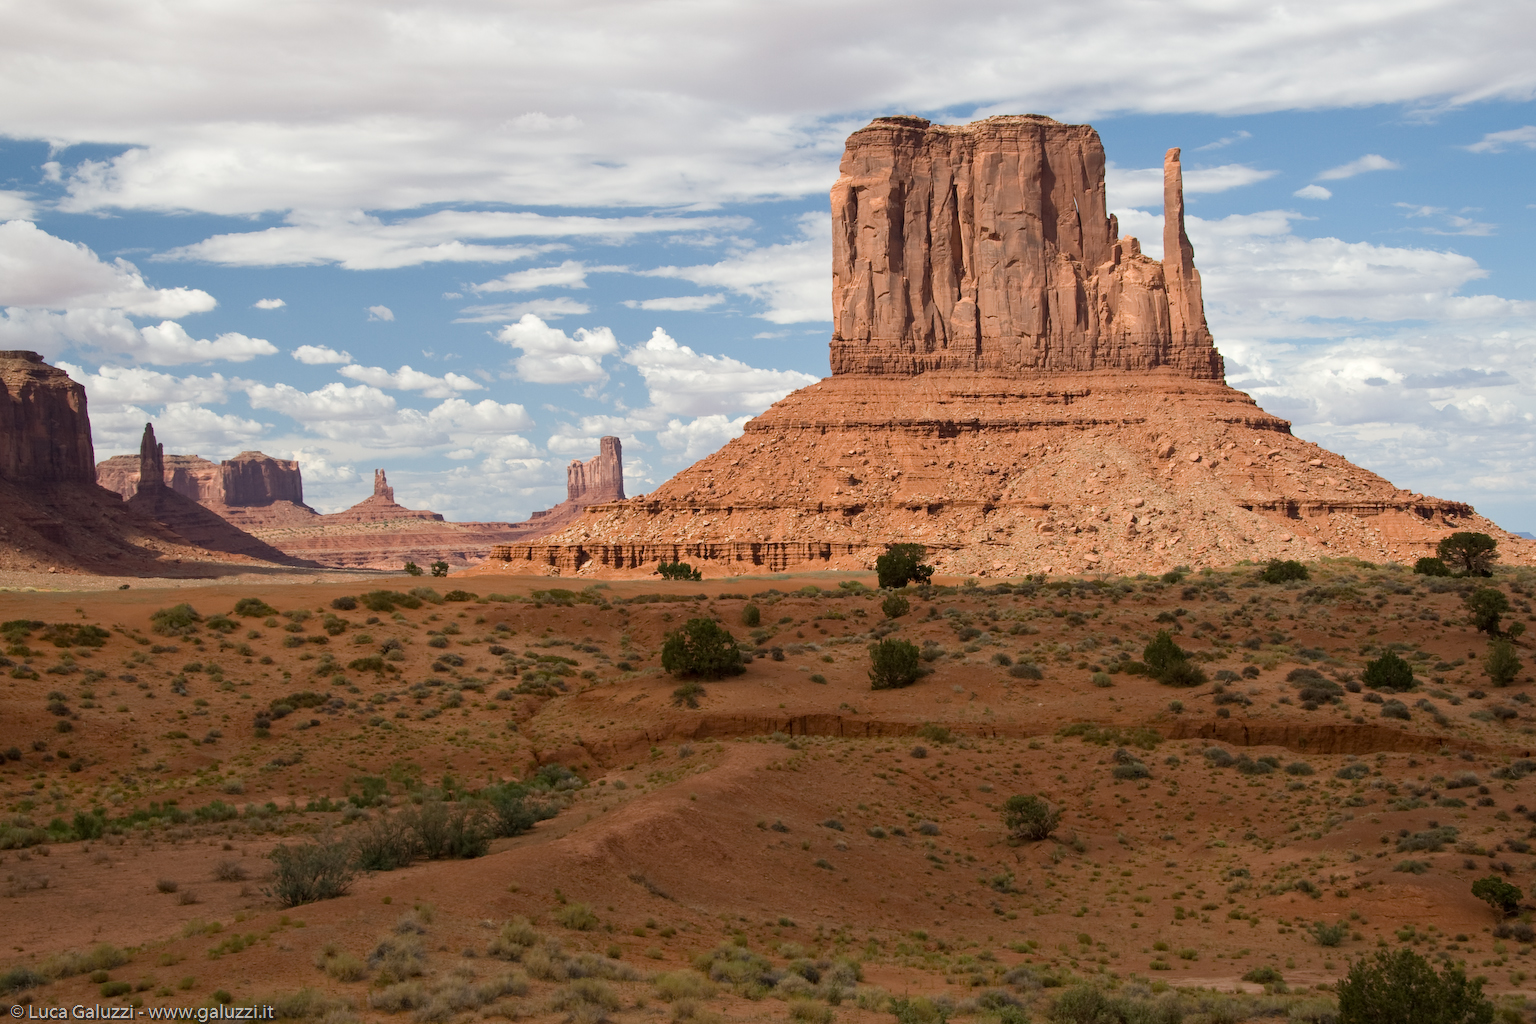 West Mitten, Monument Valley Navajo Tribal Park